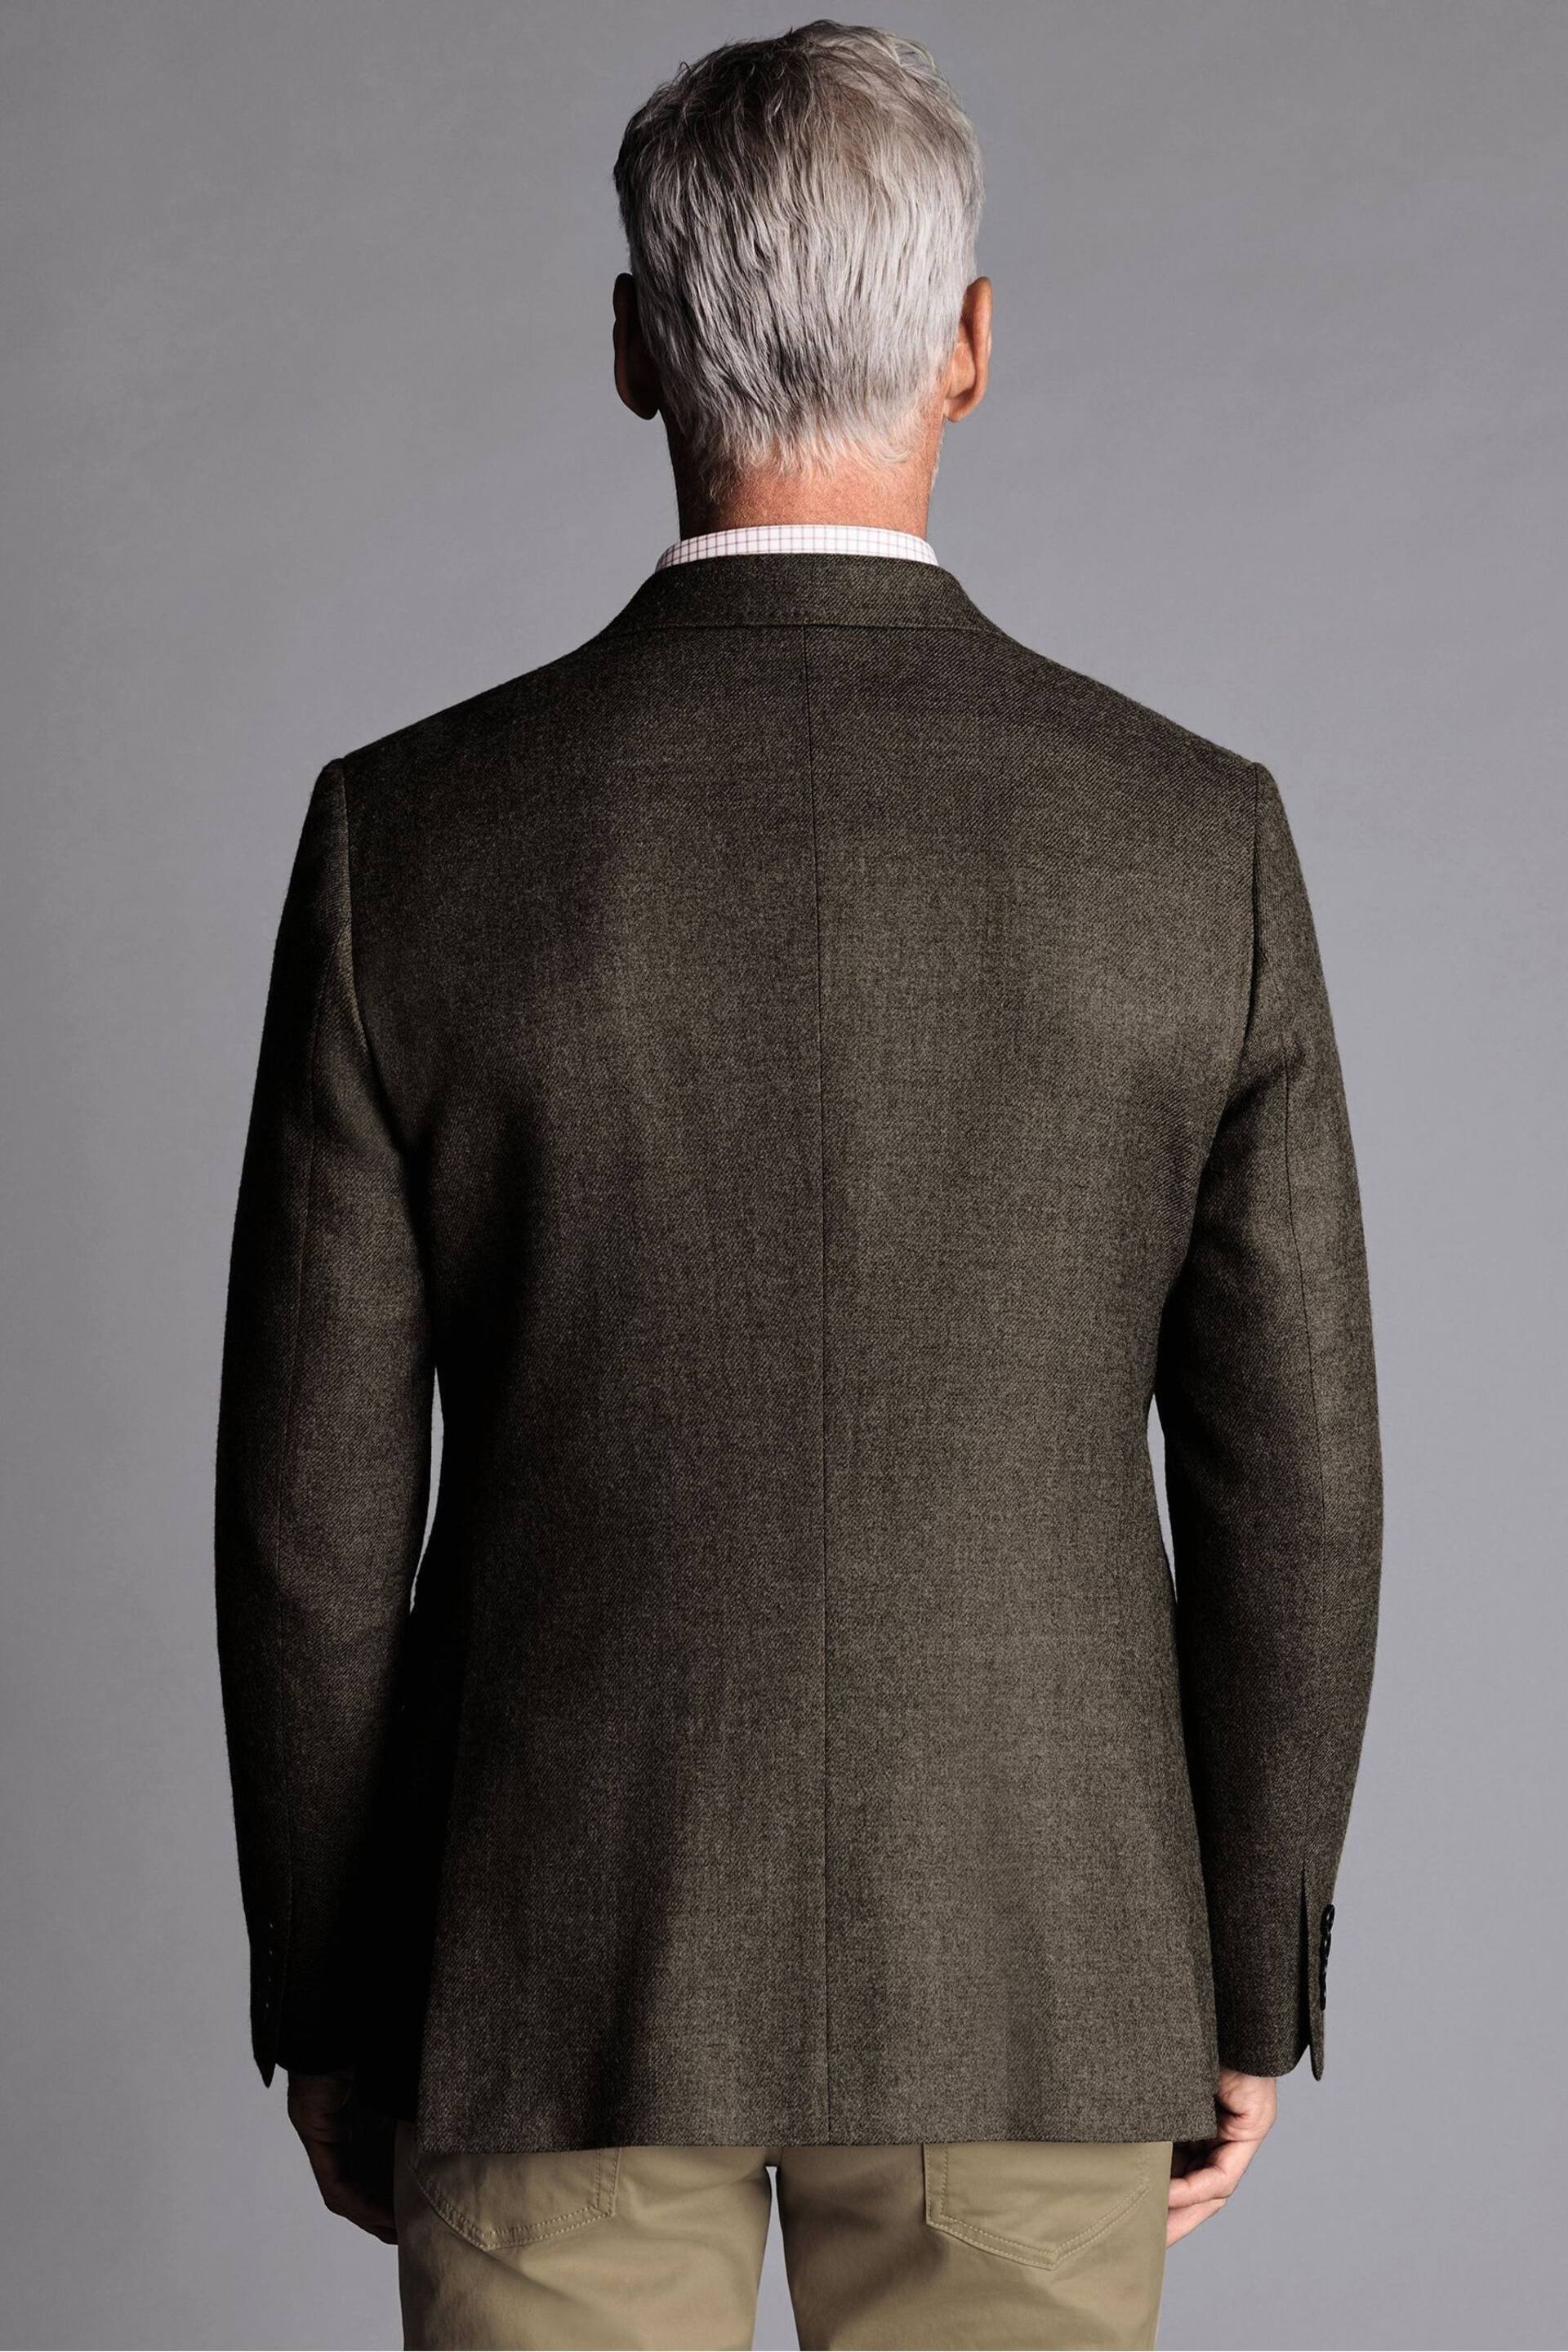 Charles Tyrwhitt Brown Slim Fit Twill Wool Jacket - Image 2 of 5